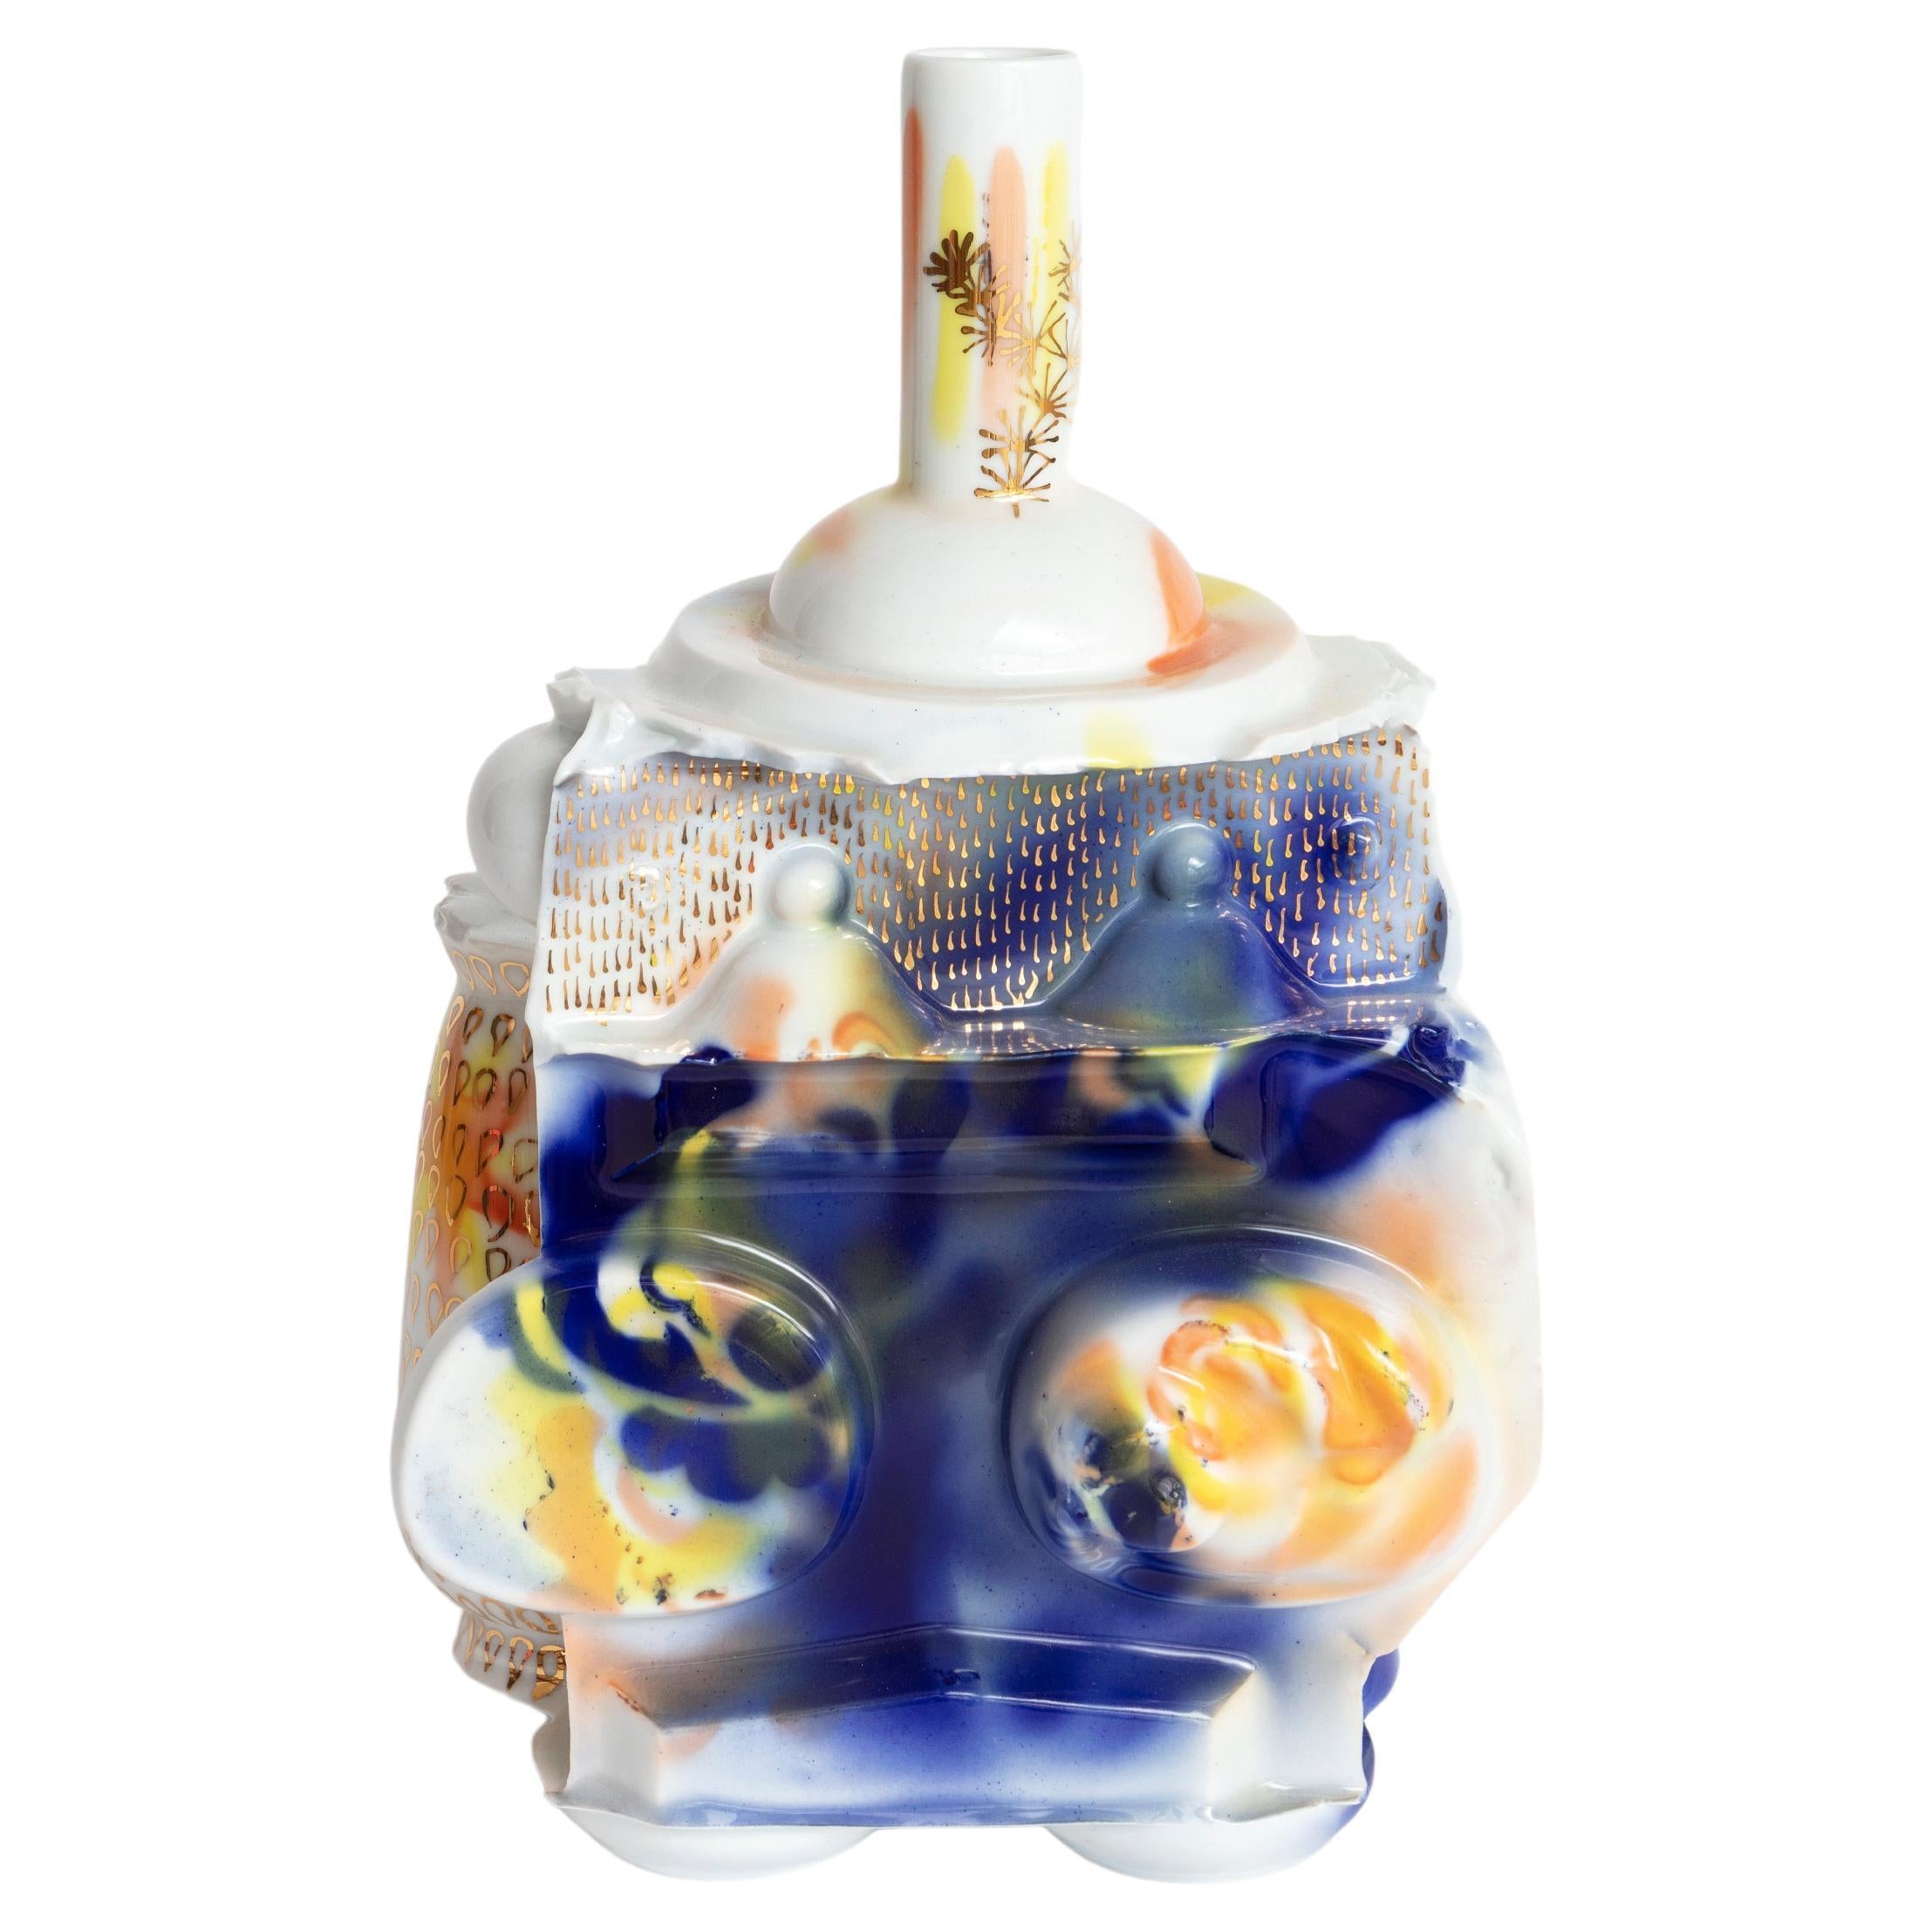 "Smoker" decorated enameled porcelain vase, unique piece For Sale